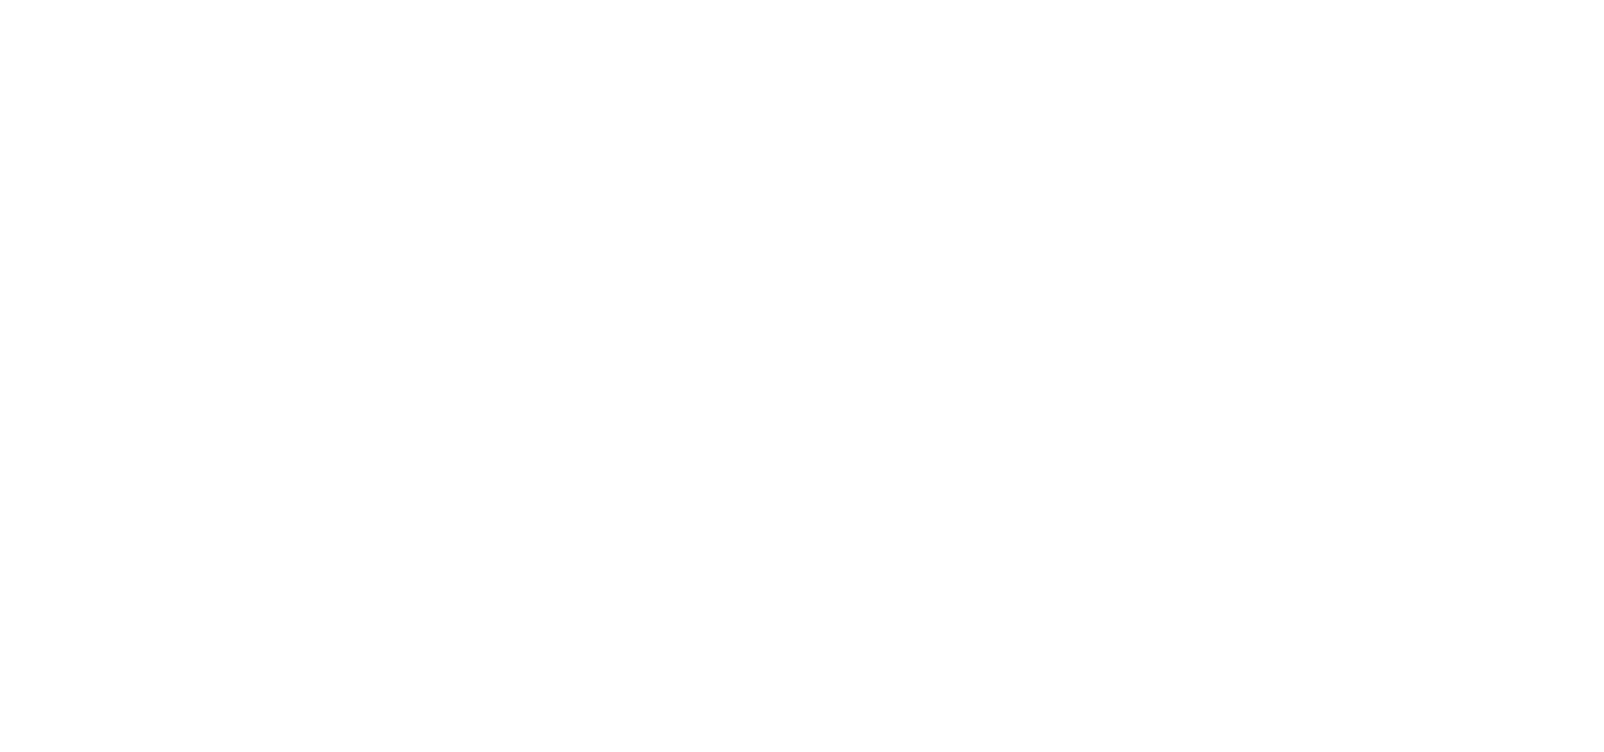 U.S. Physical Therapy Logo groß für dunkle Hintergründe (transparentes PNG)